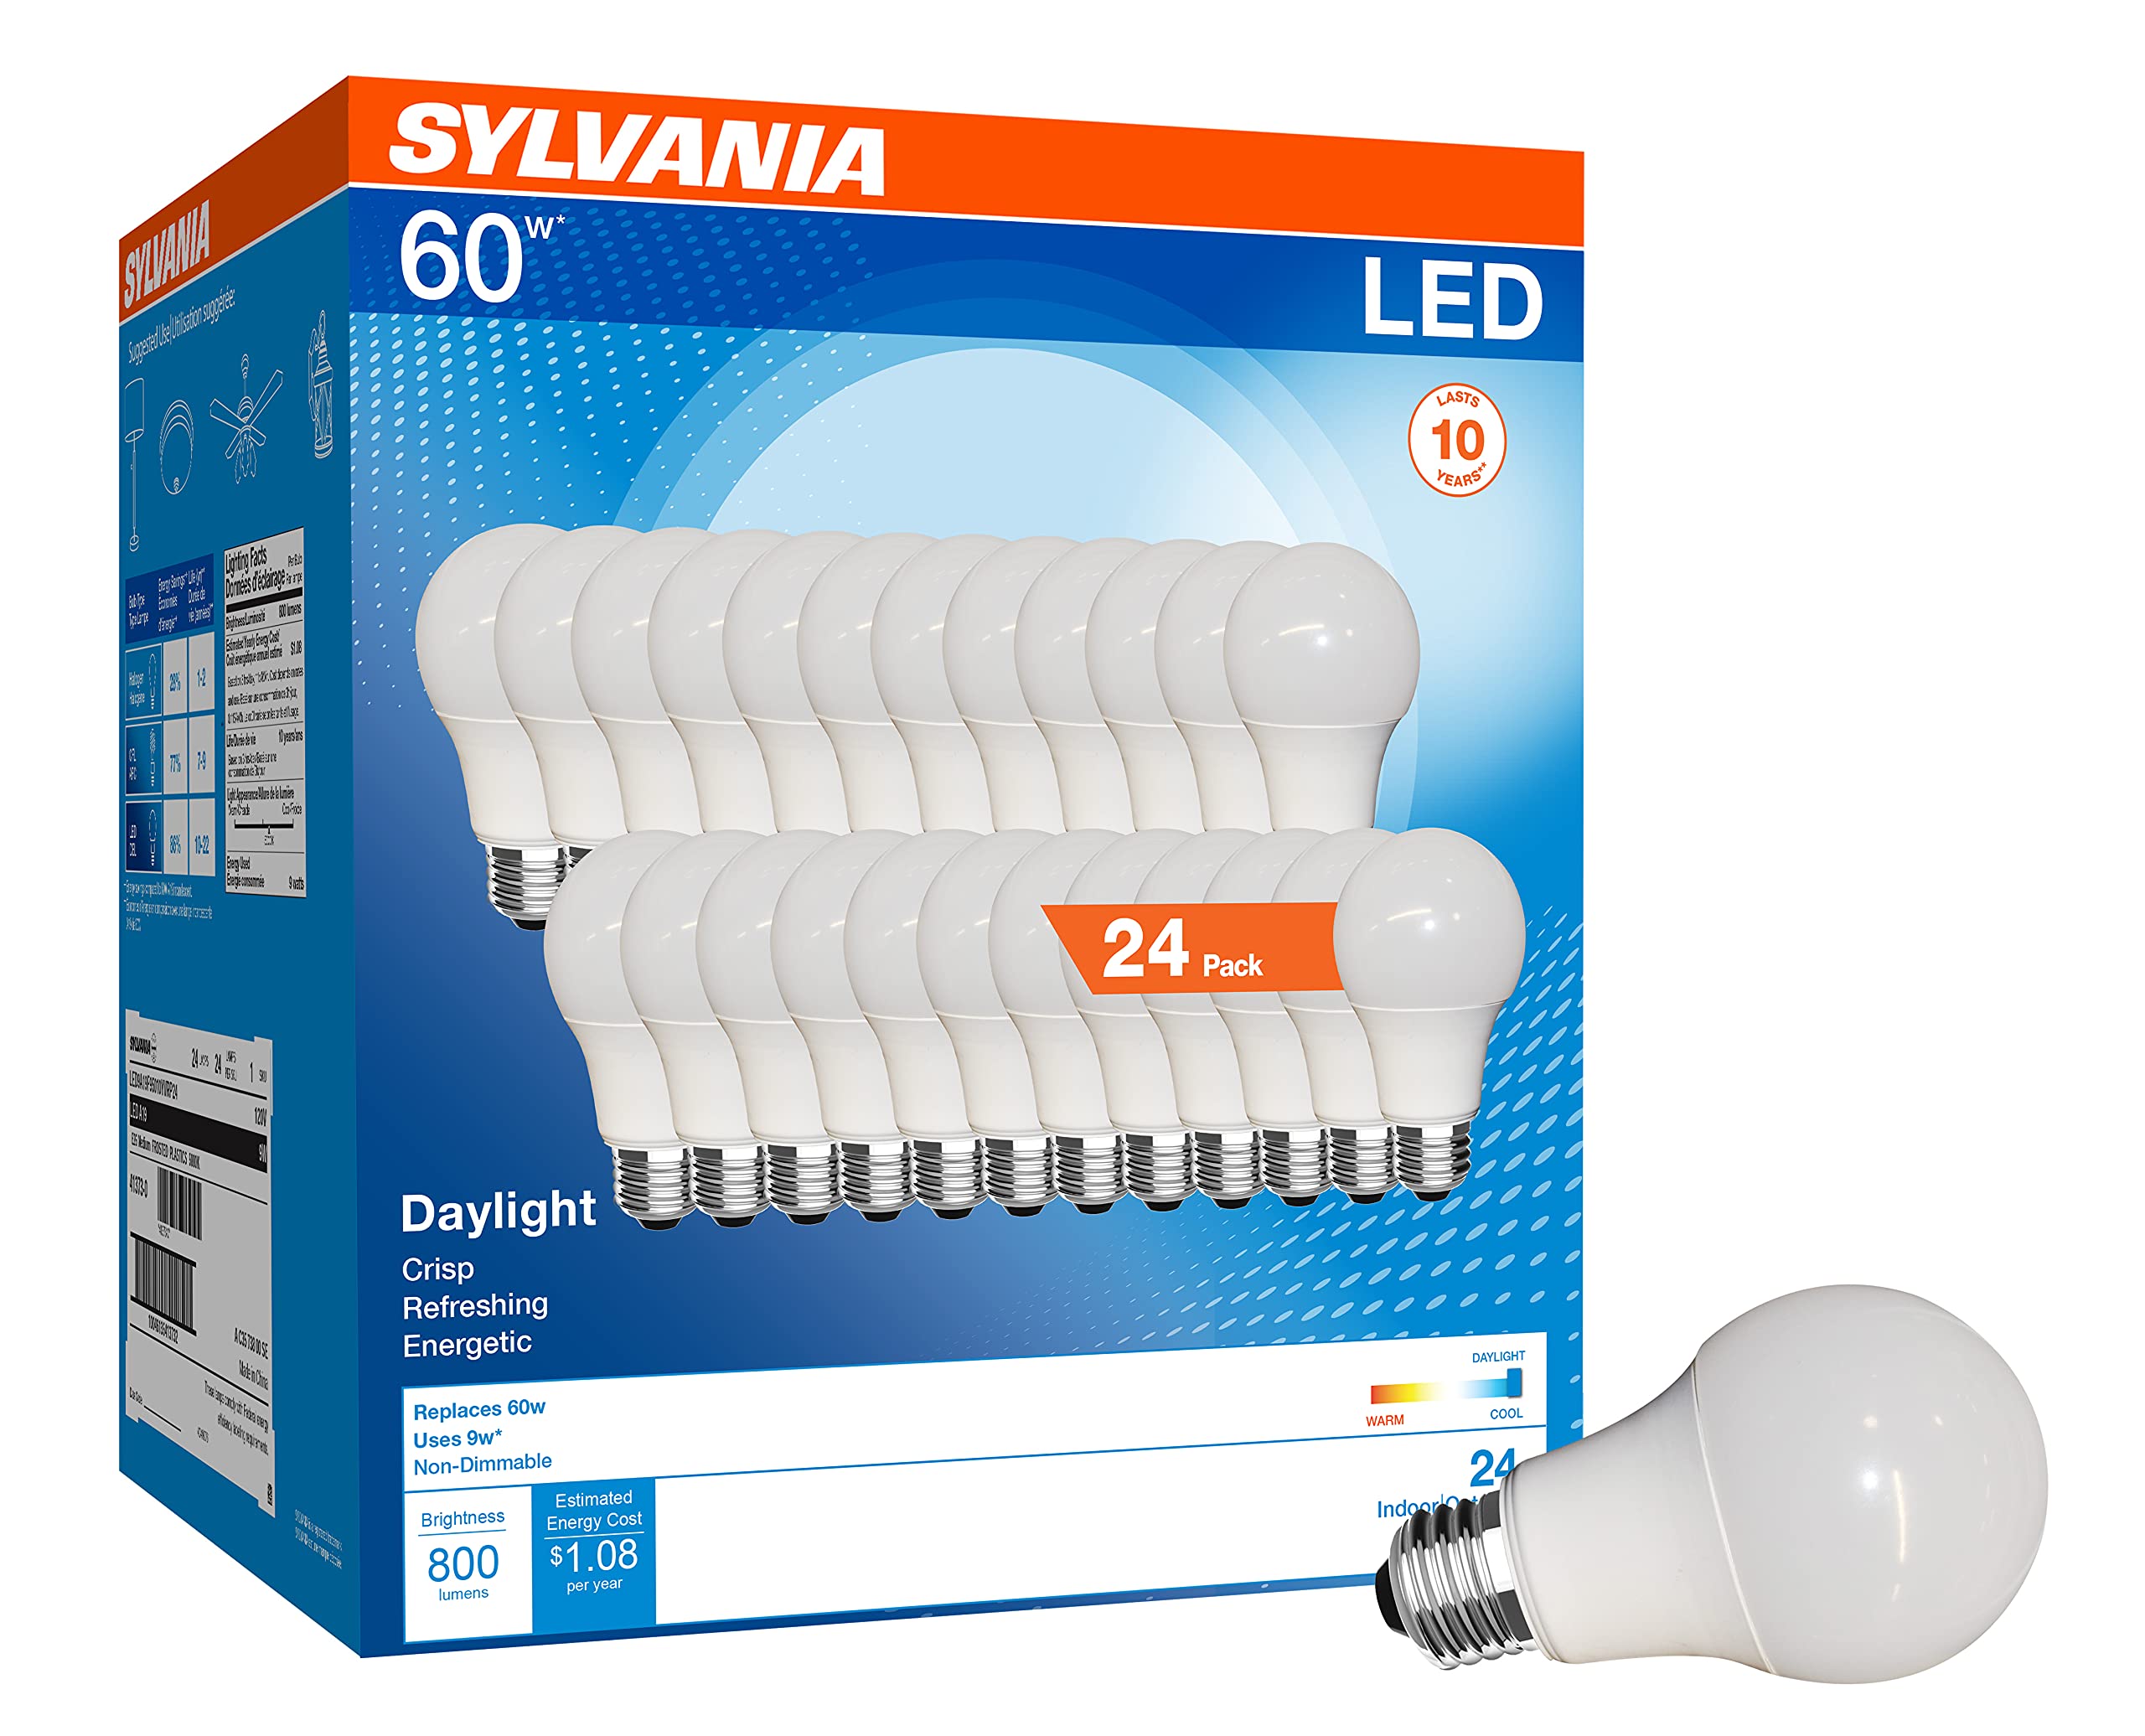 LEDVANCE SYLVANIA LED A19 Light Bulb, 60W Equivalent, Efficient 9W, CEC Compliant, 10 Year, Non-Dimmable, 5000K, 800 Lumens, 90 CRI, Dayl